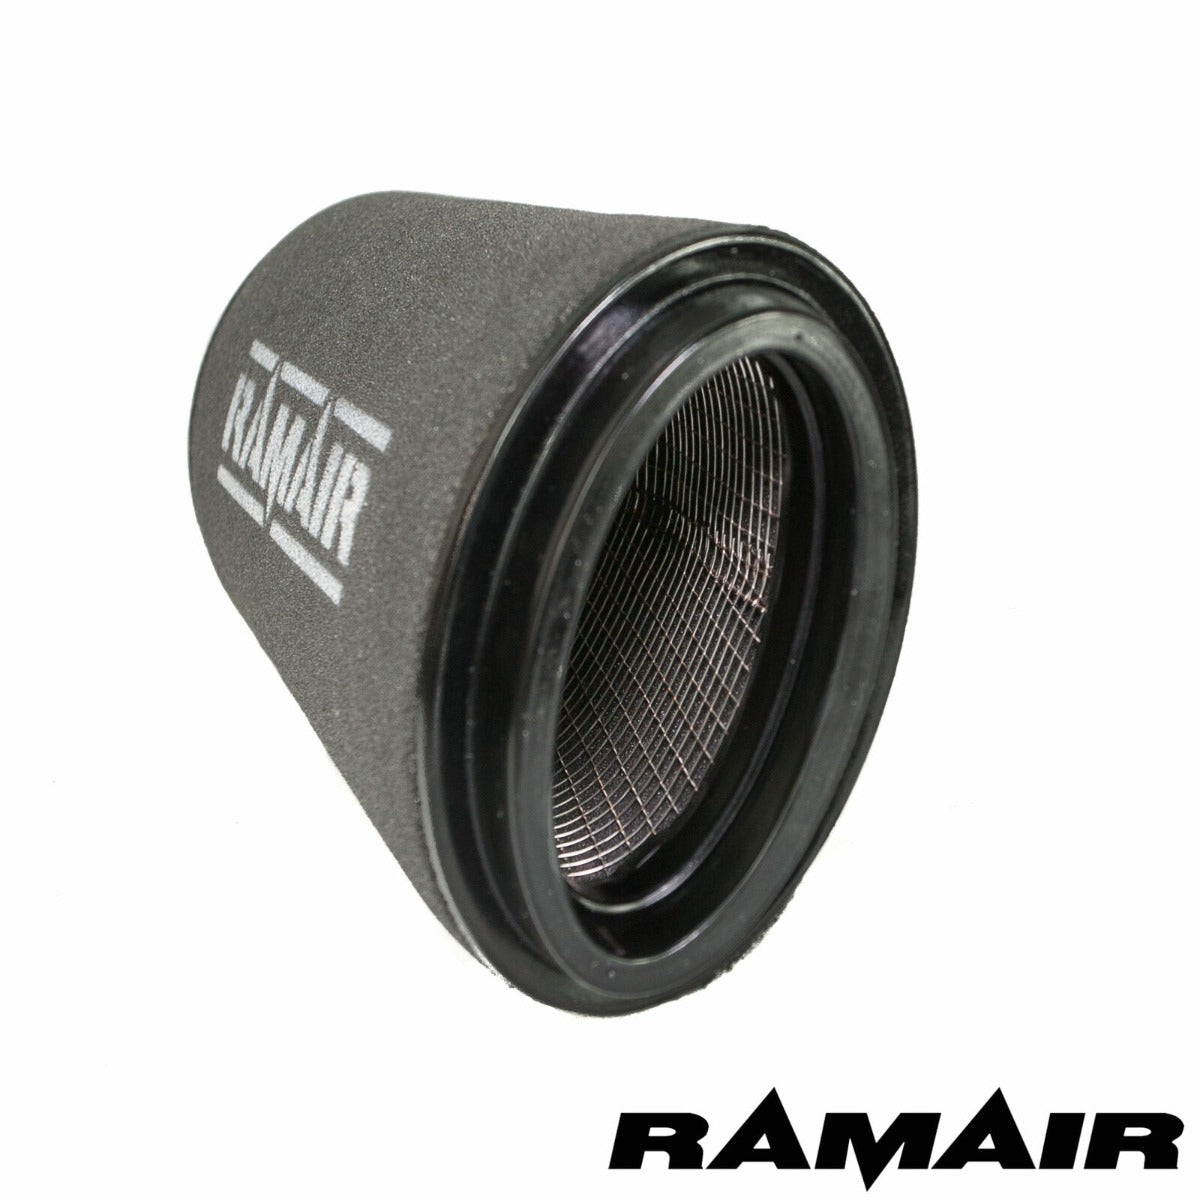 RAMAIR Air Panel Filter for Land Rover Freelander 2.0 TD4 (11/00-)